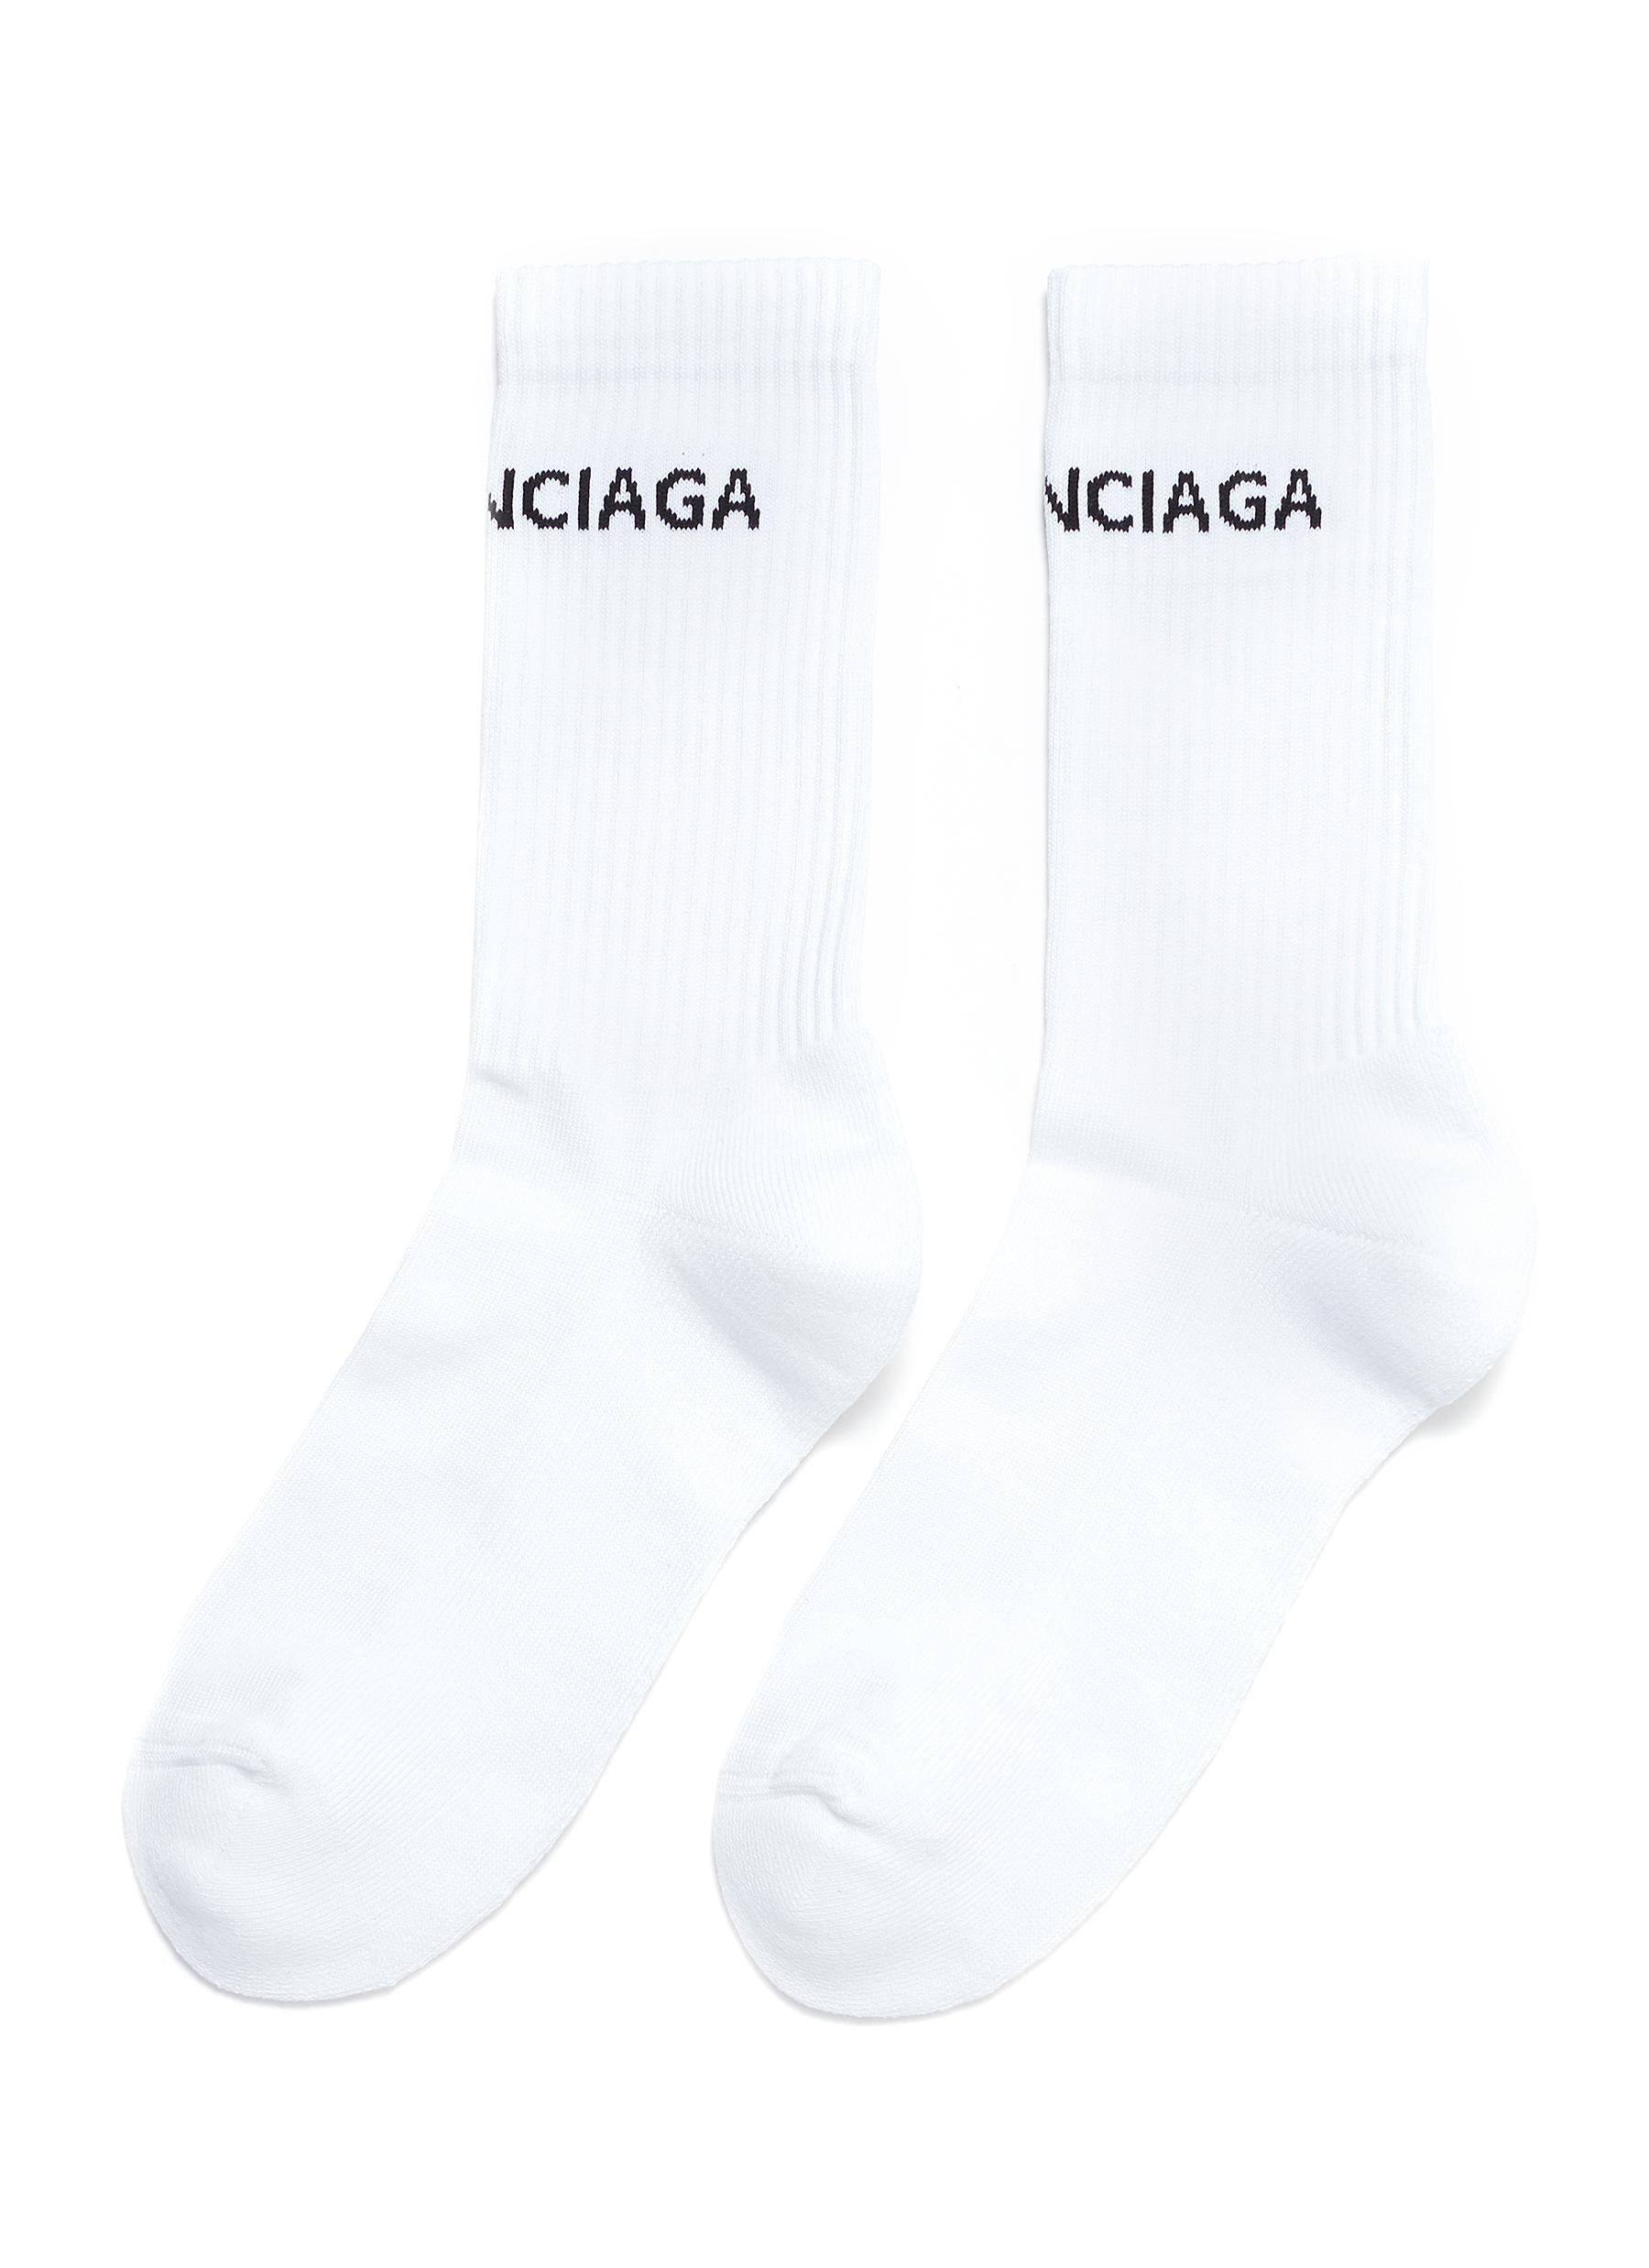 these are balenciaga socks